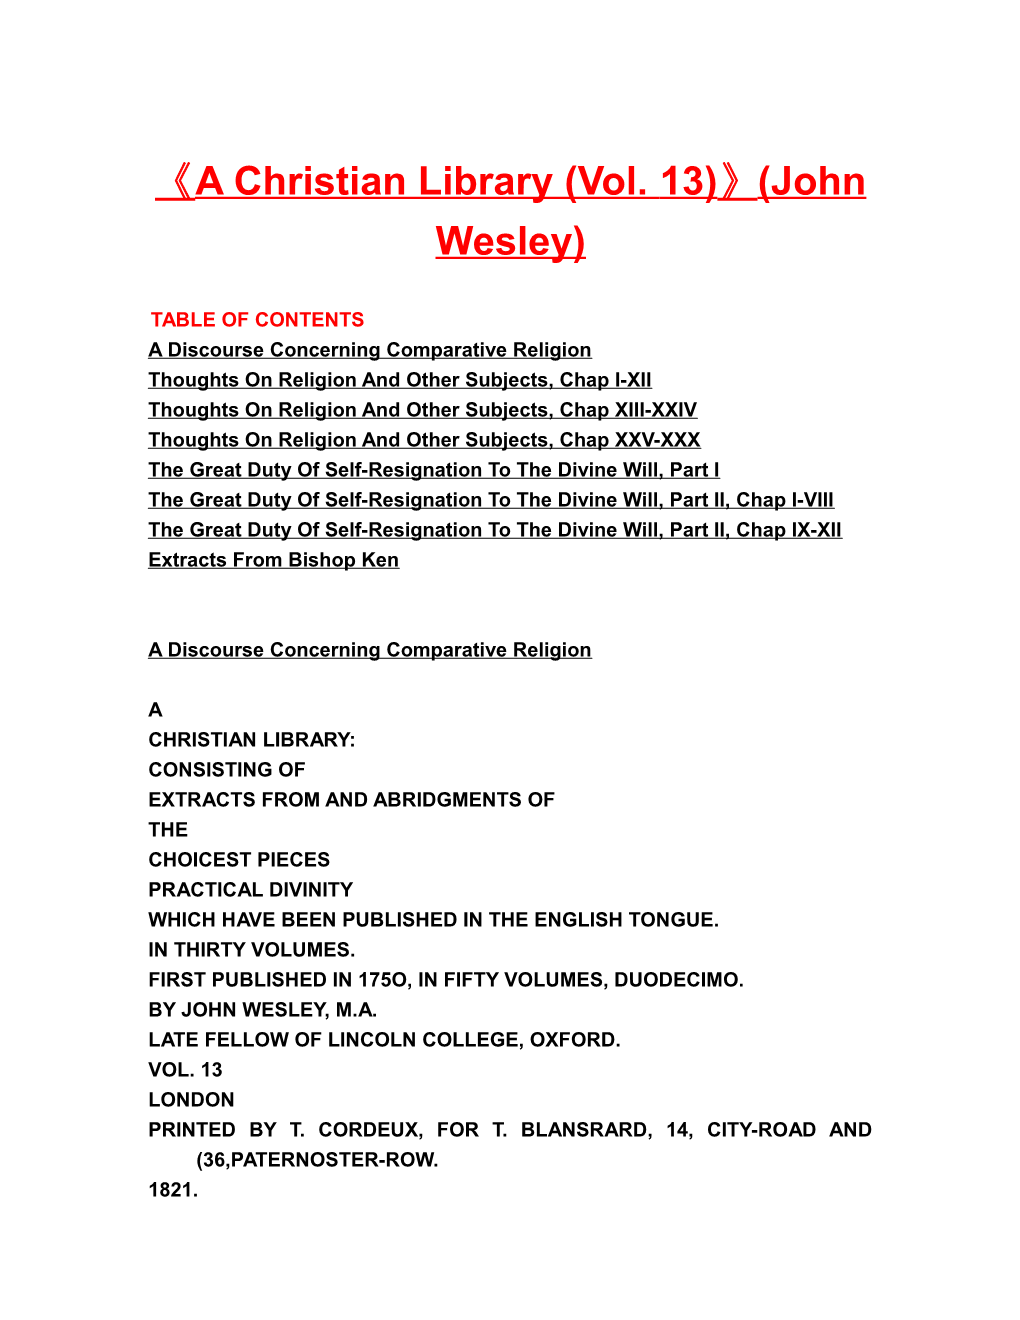 A Christian Library (Vol. 13) (John Wesley)